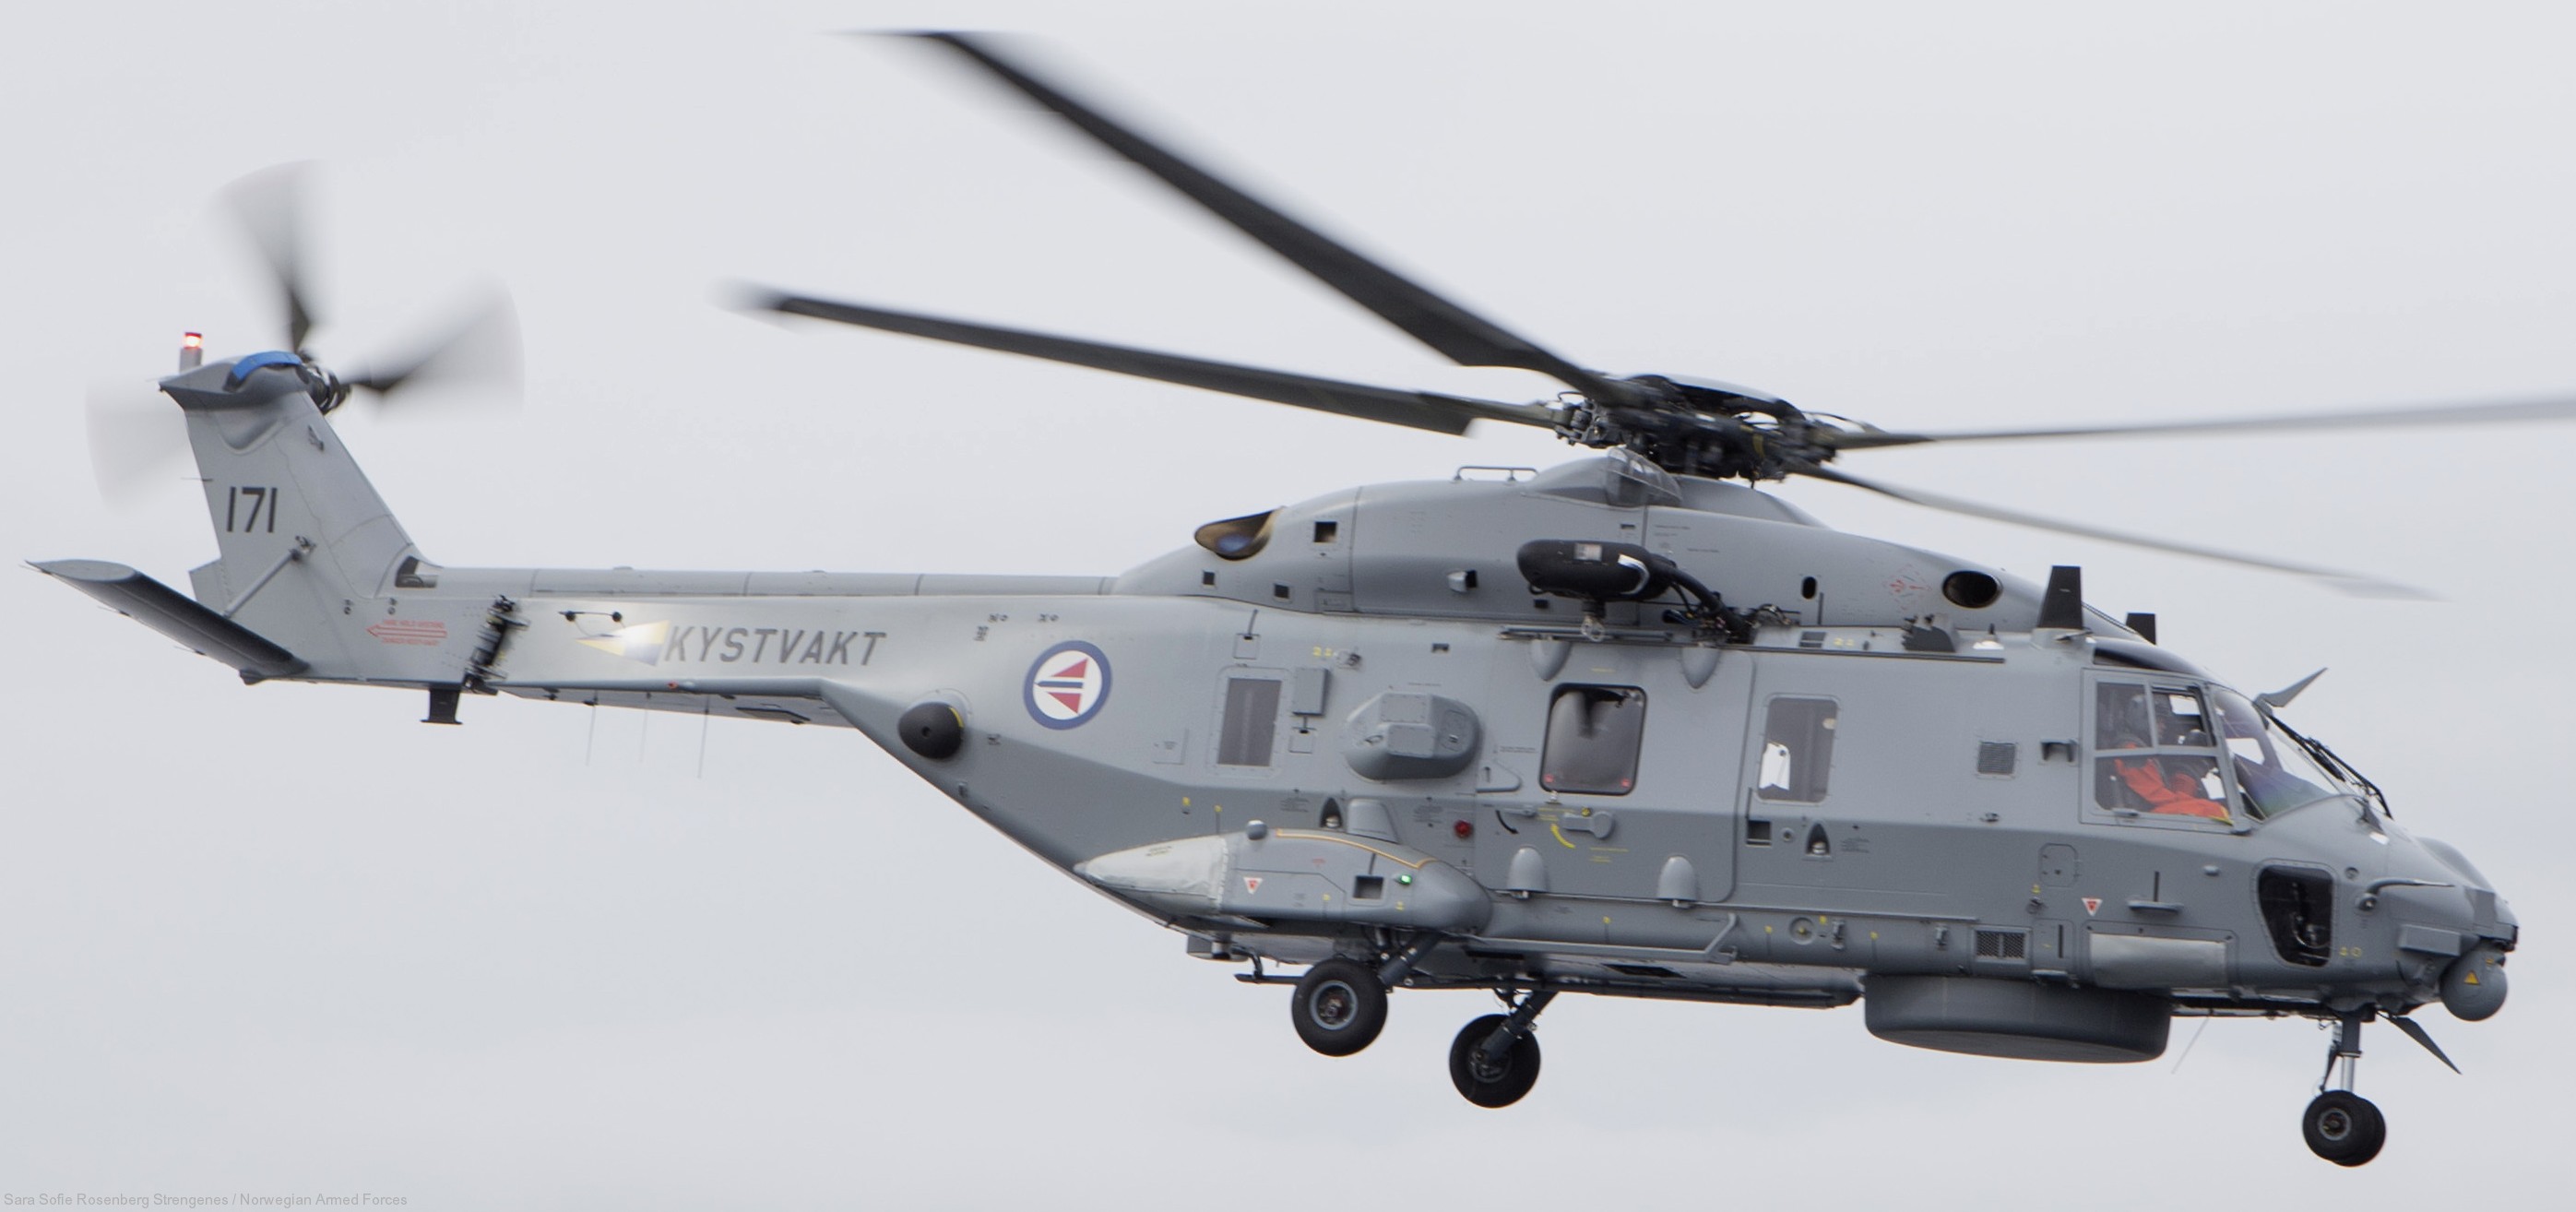 nh90 nfh asw helicopter royal norwegian coast guard navy air force kystvakt sjoforsvaret 171 02